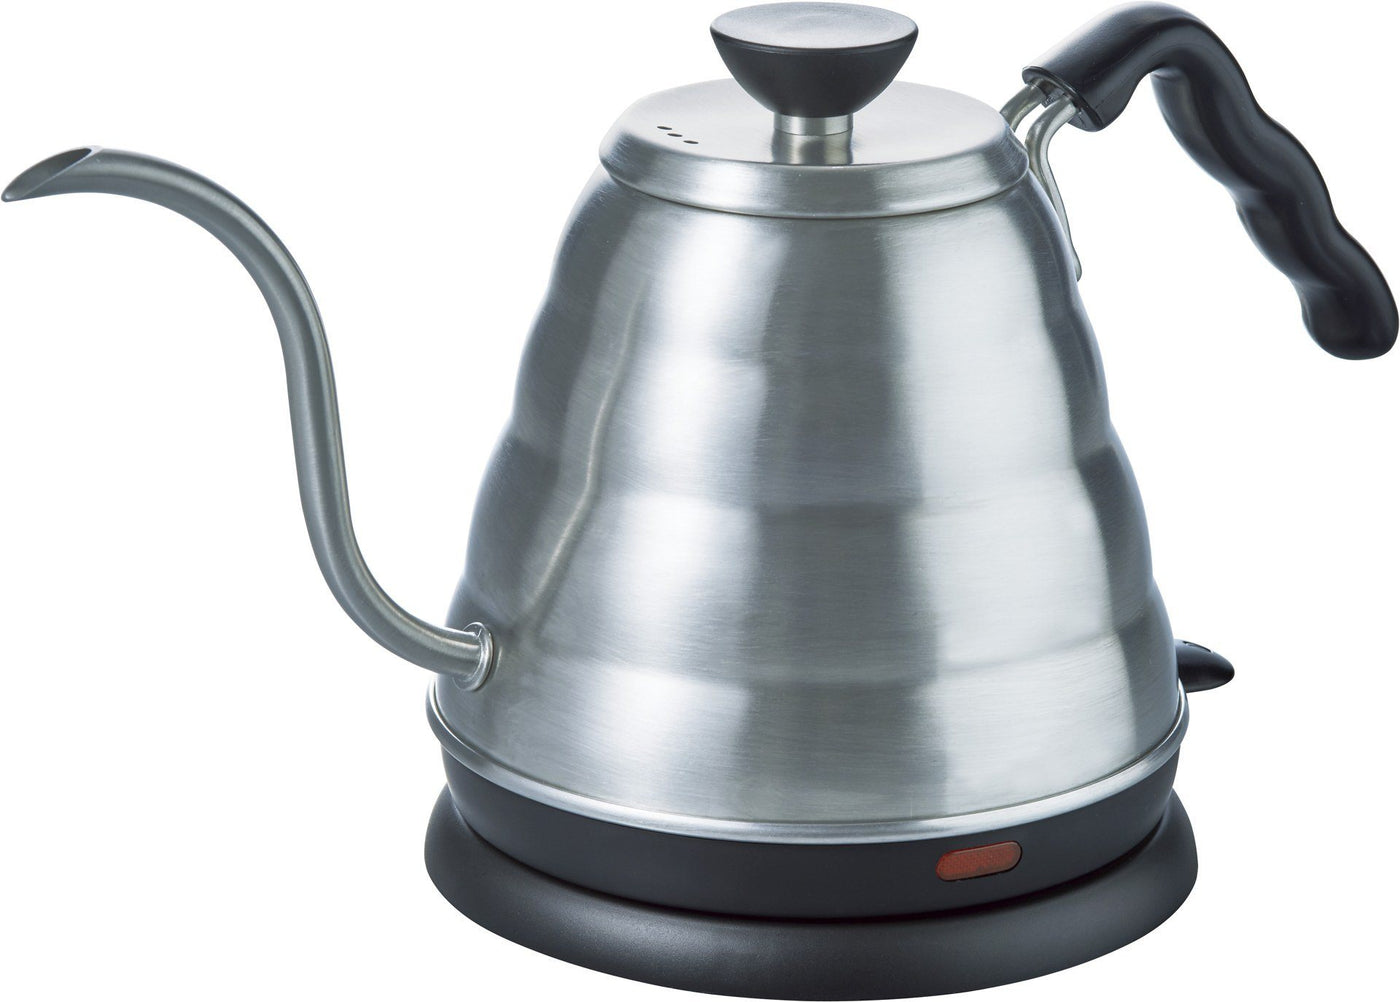 0.8 l electric kettle